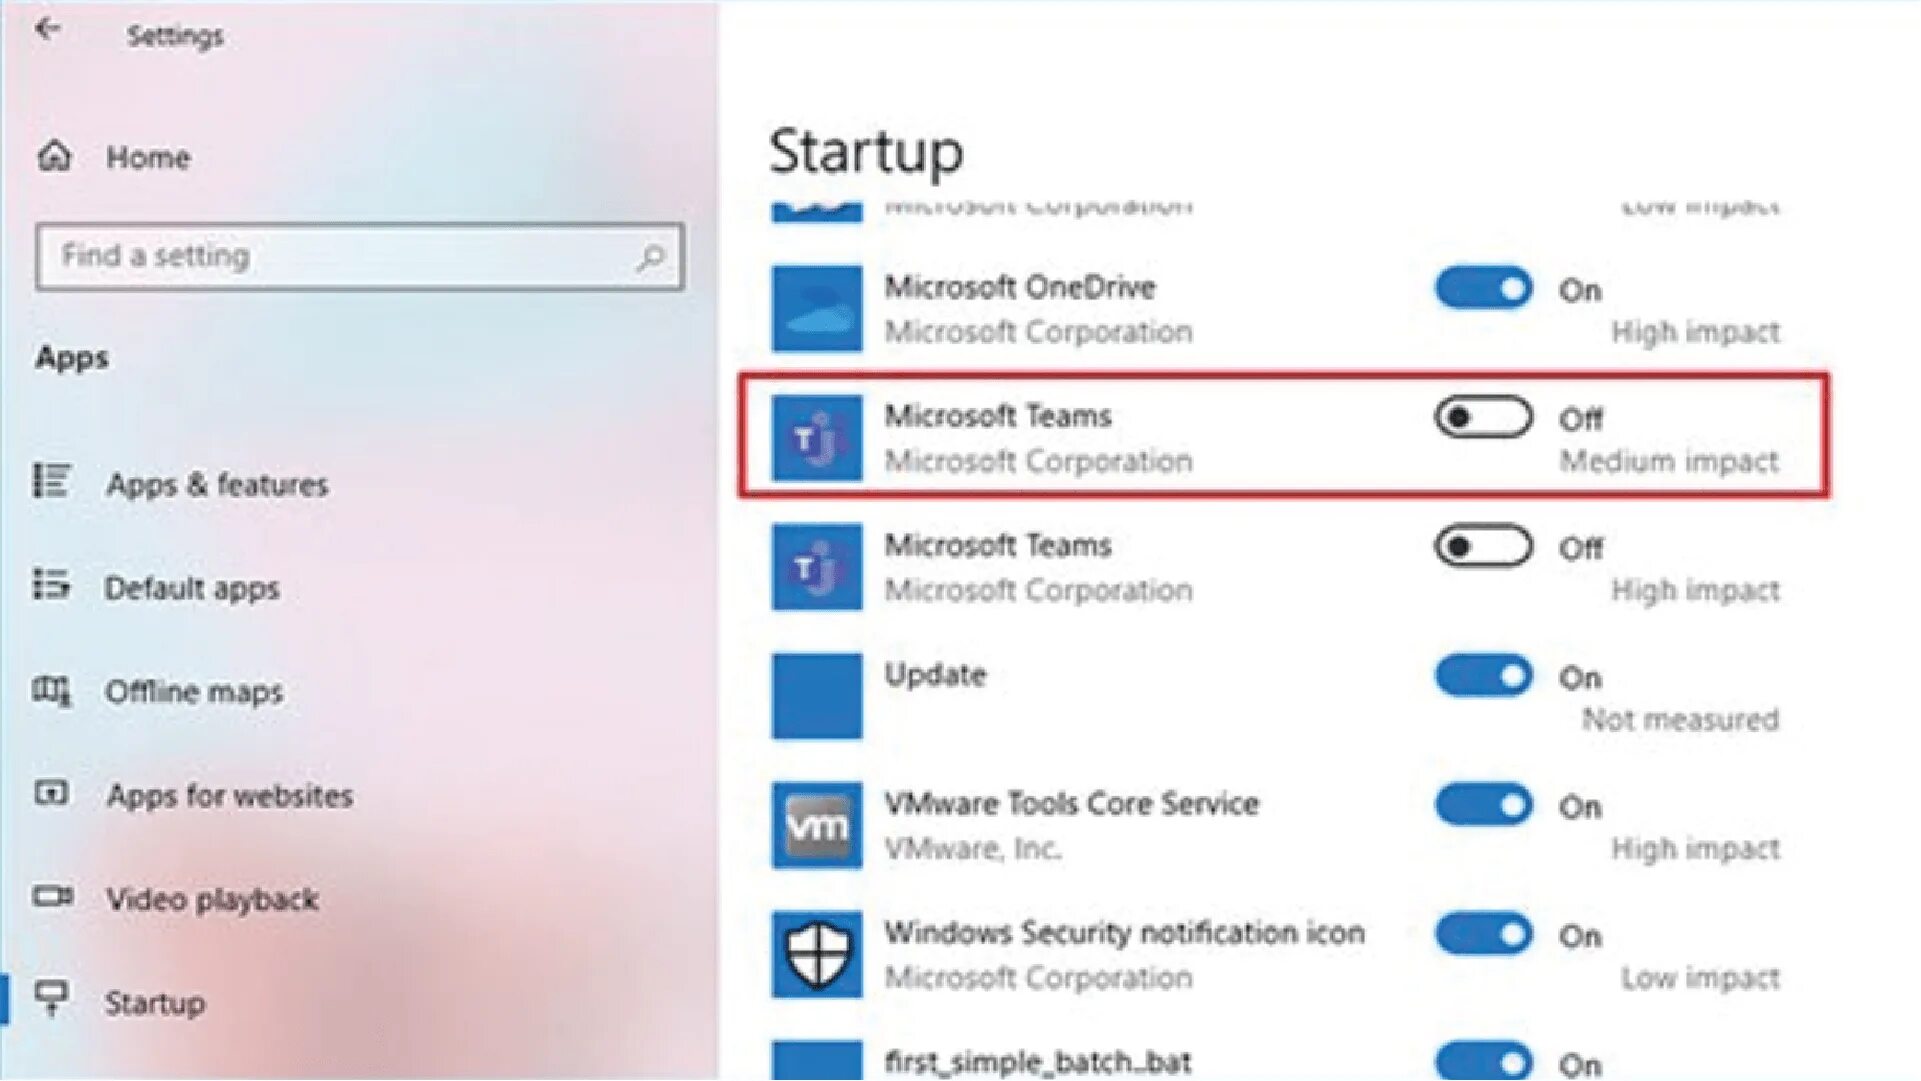 Startup setting. Microsoft for Startups. Startup settings. Windows 10 Startup programs. Windows settings.